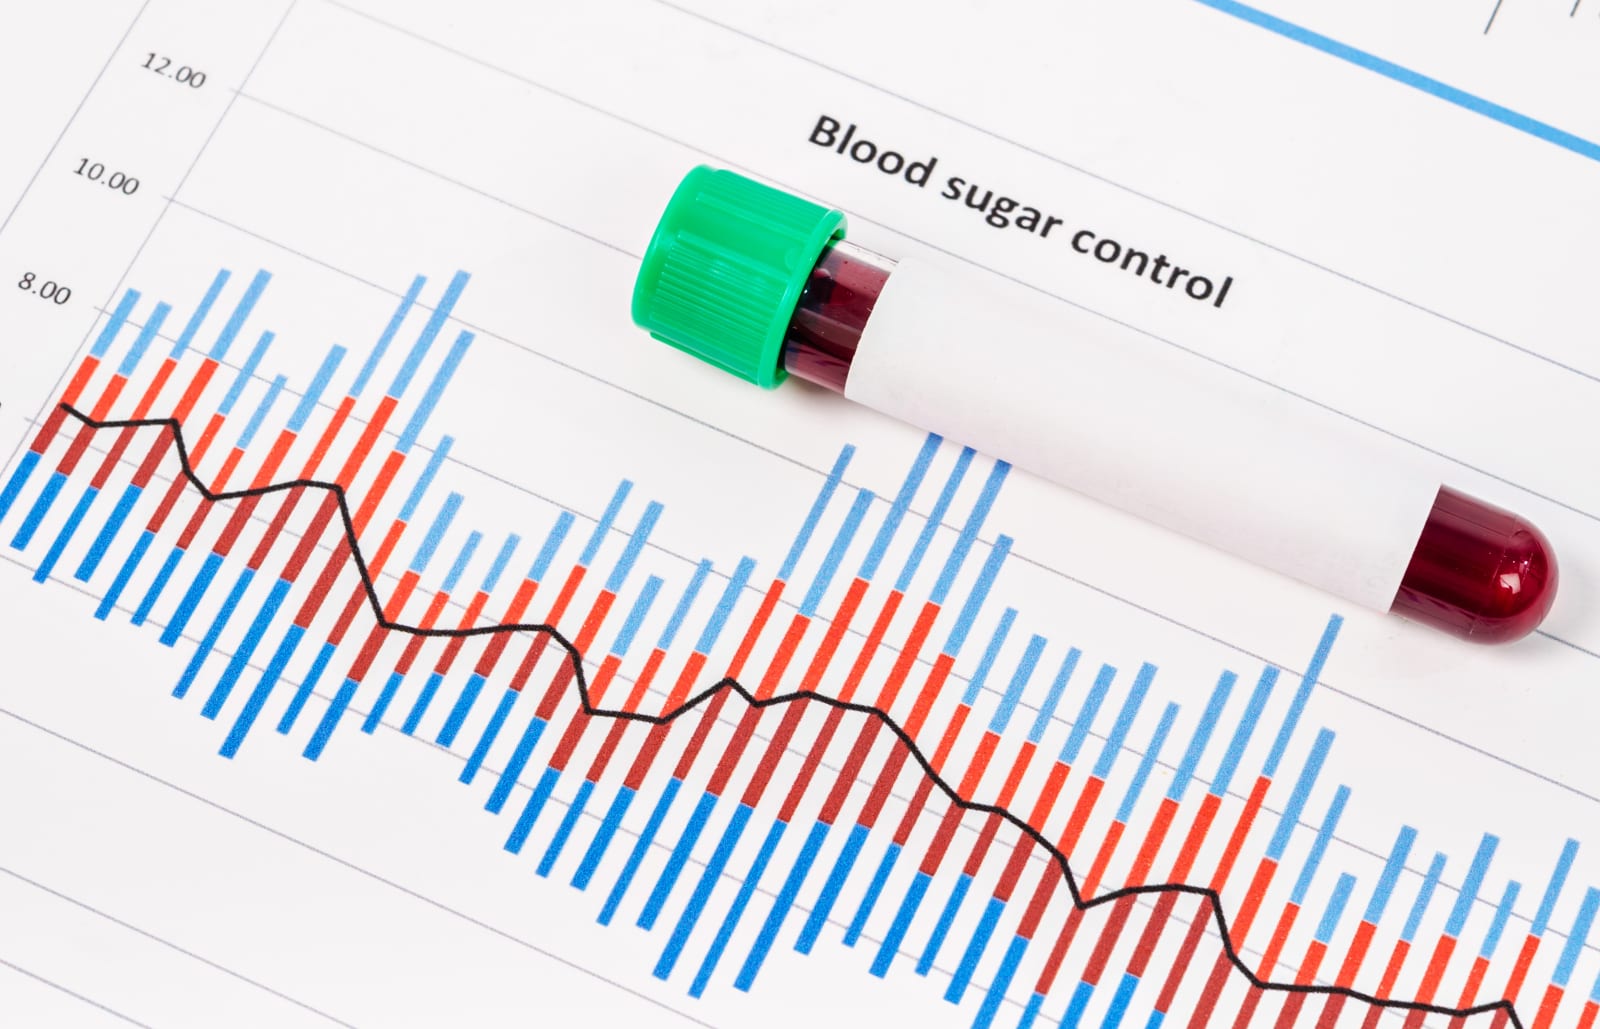 Sample blood for screening diabetic test